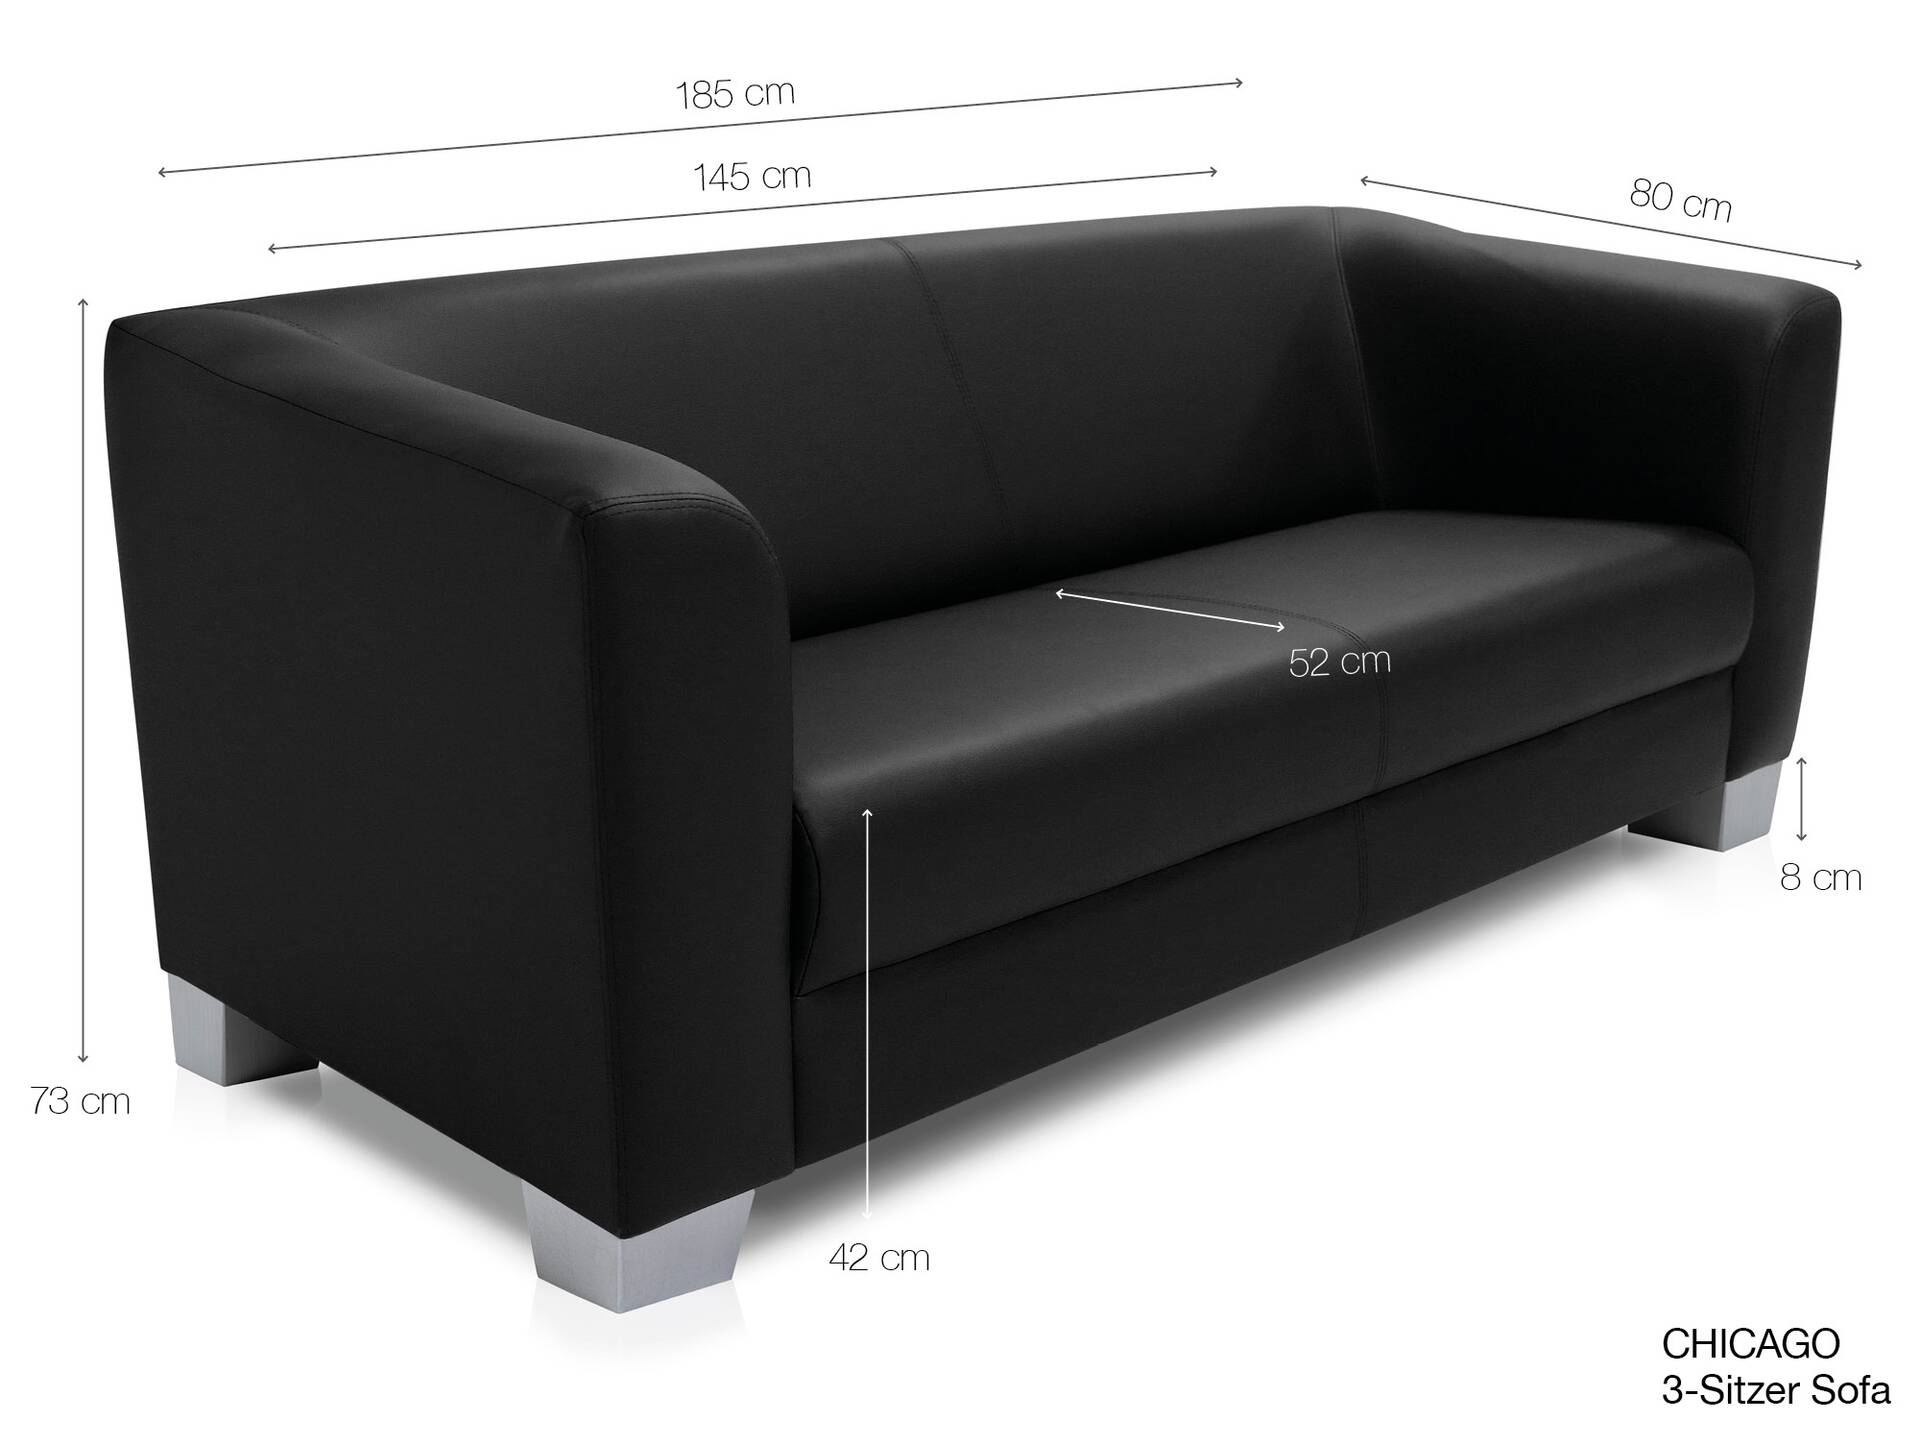 CHICAGO 3-Sitzer Sofa, Material Kunstleder grau